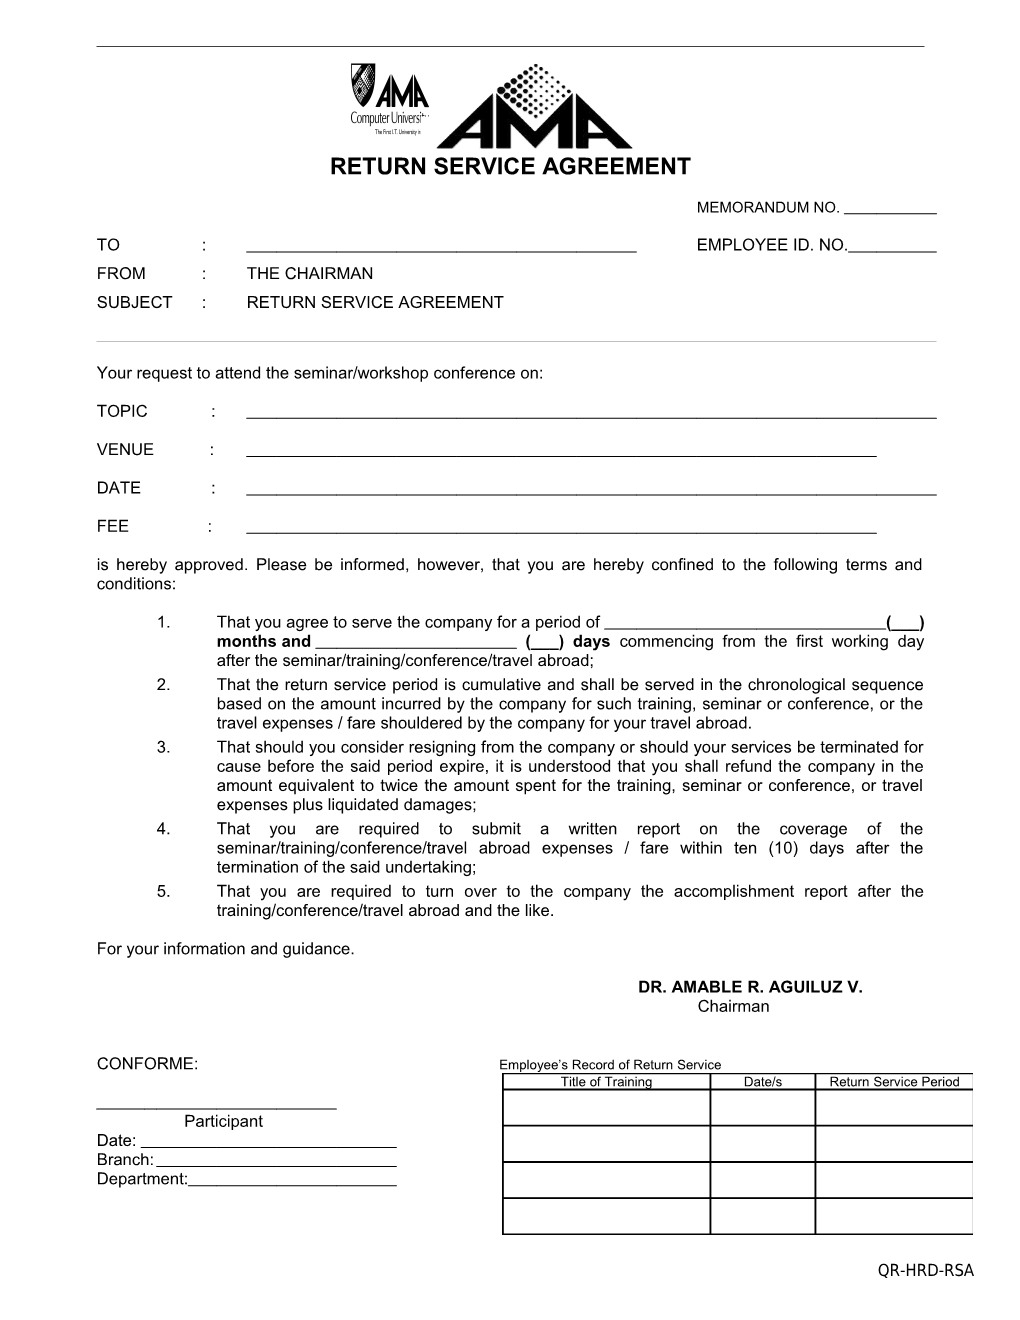 Return Service Agreement